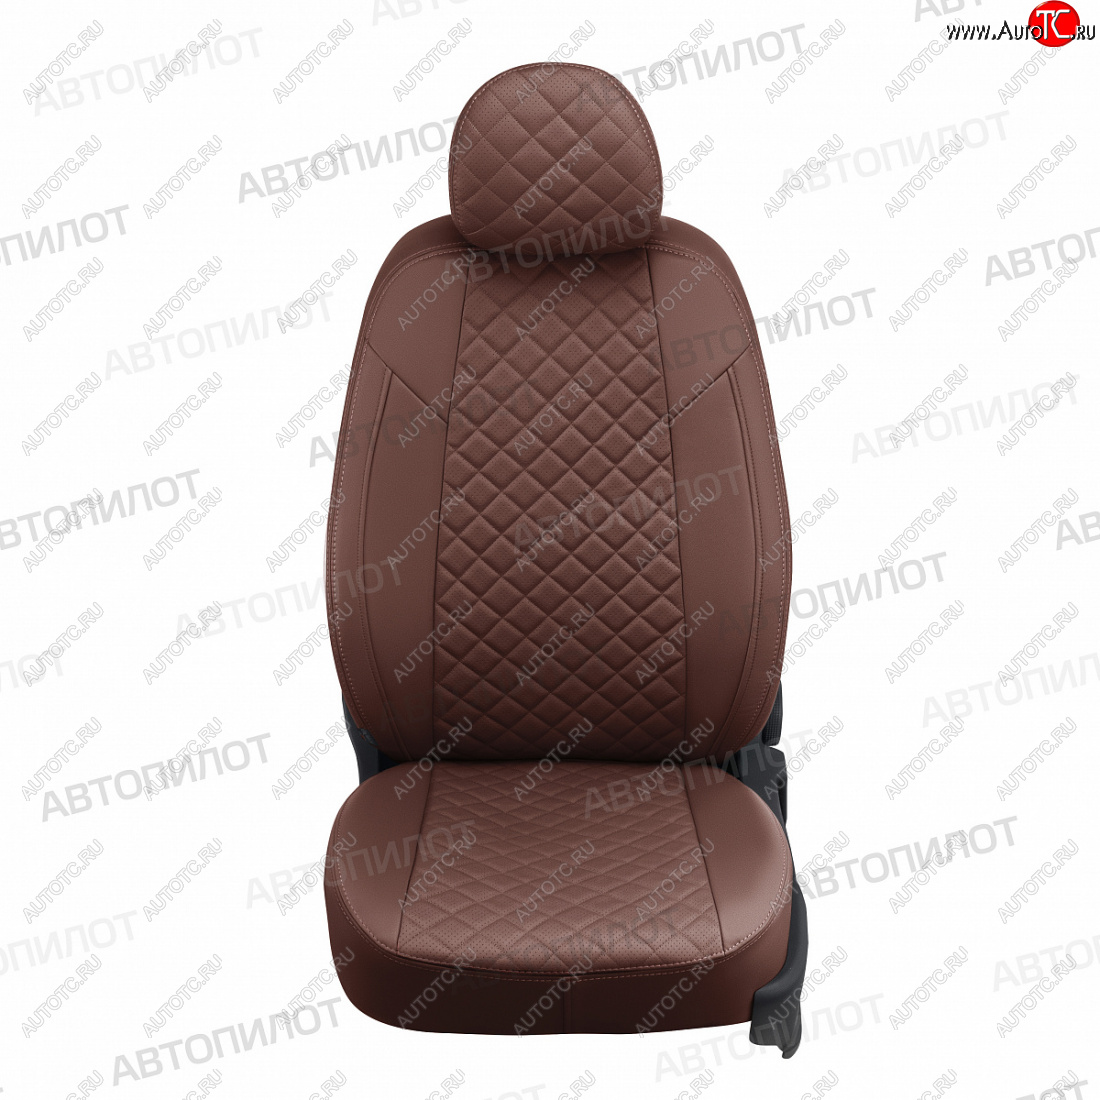 13 999 р. Чехлы сидений (экокожа) Автопилот Ромб  KIA Cerato  1 LD (2004-2007) (темно-коричневый)